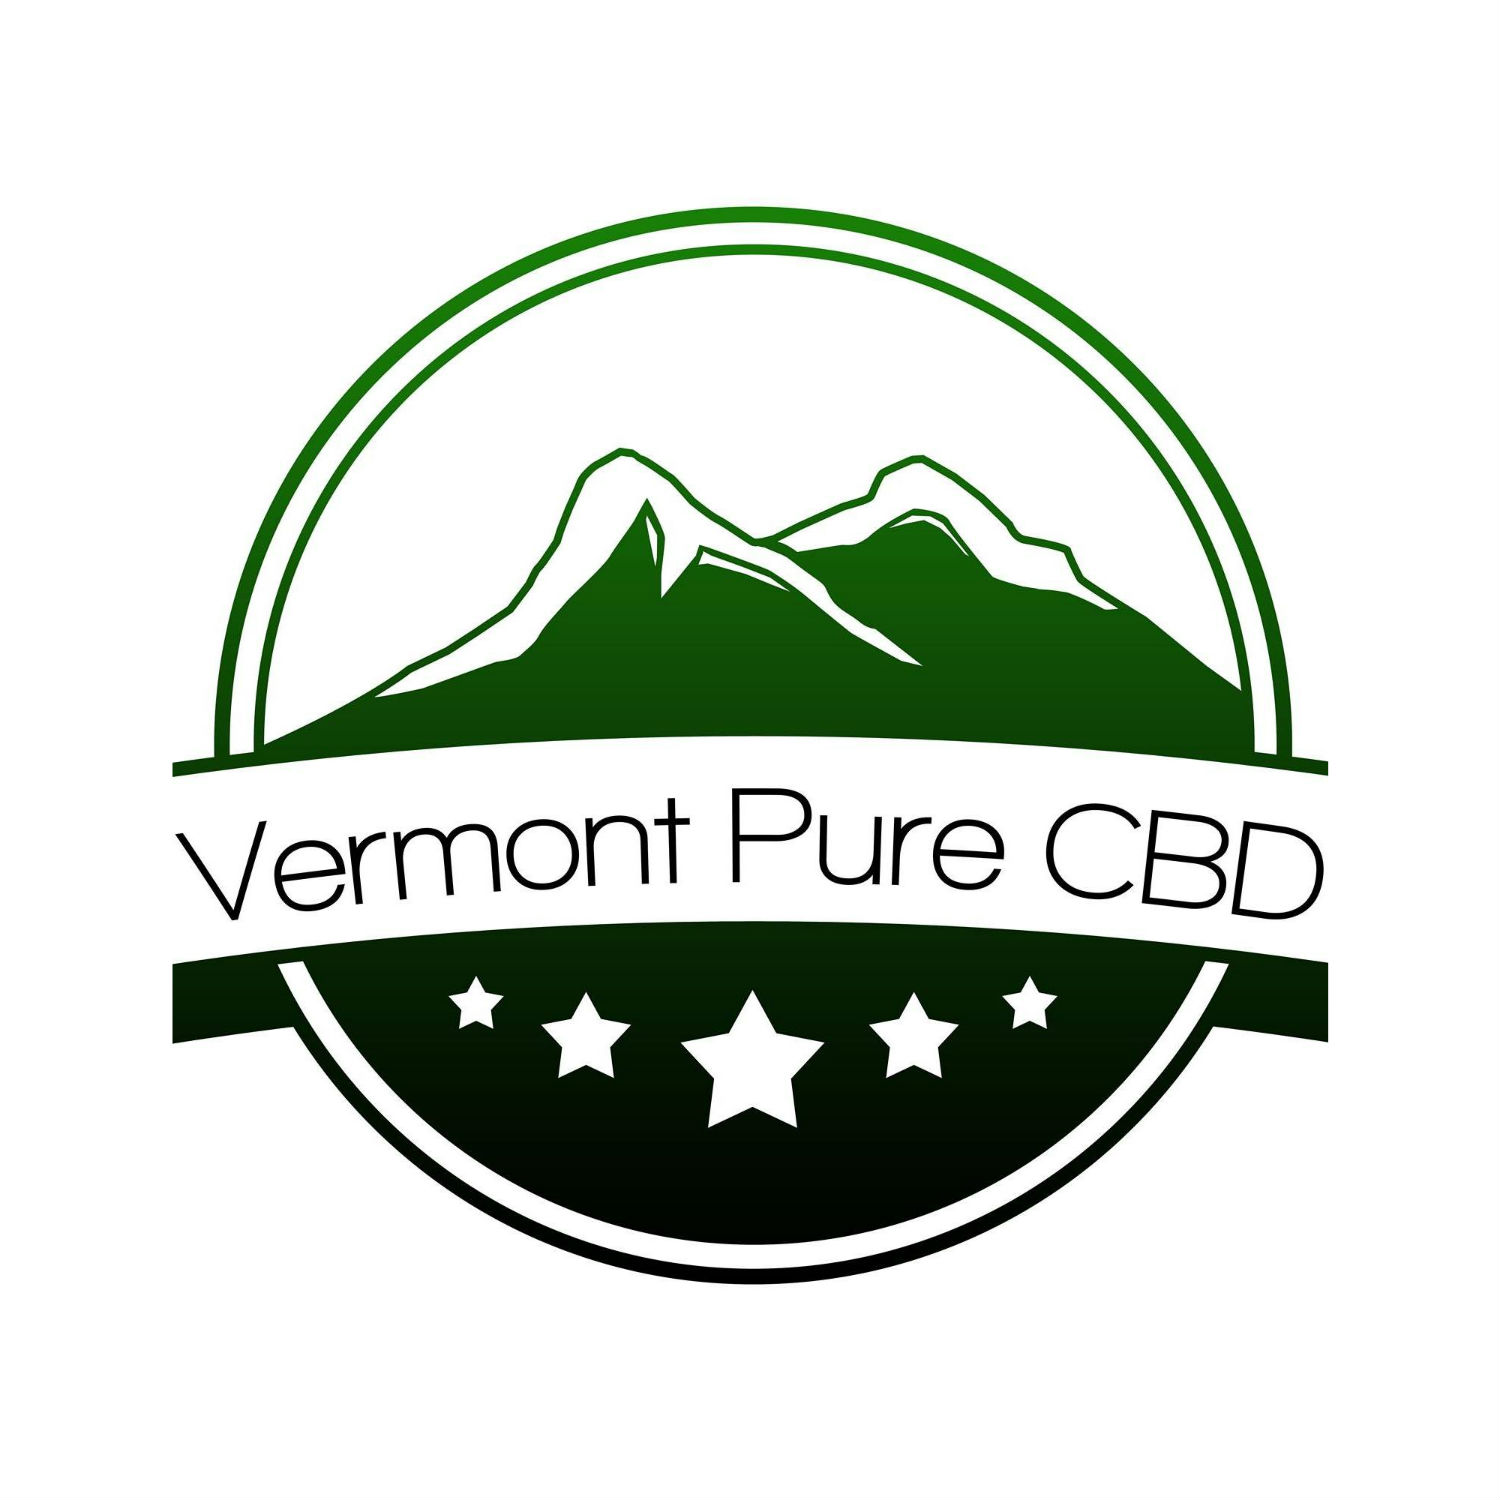 vermont pure cbd logo